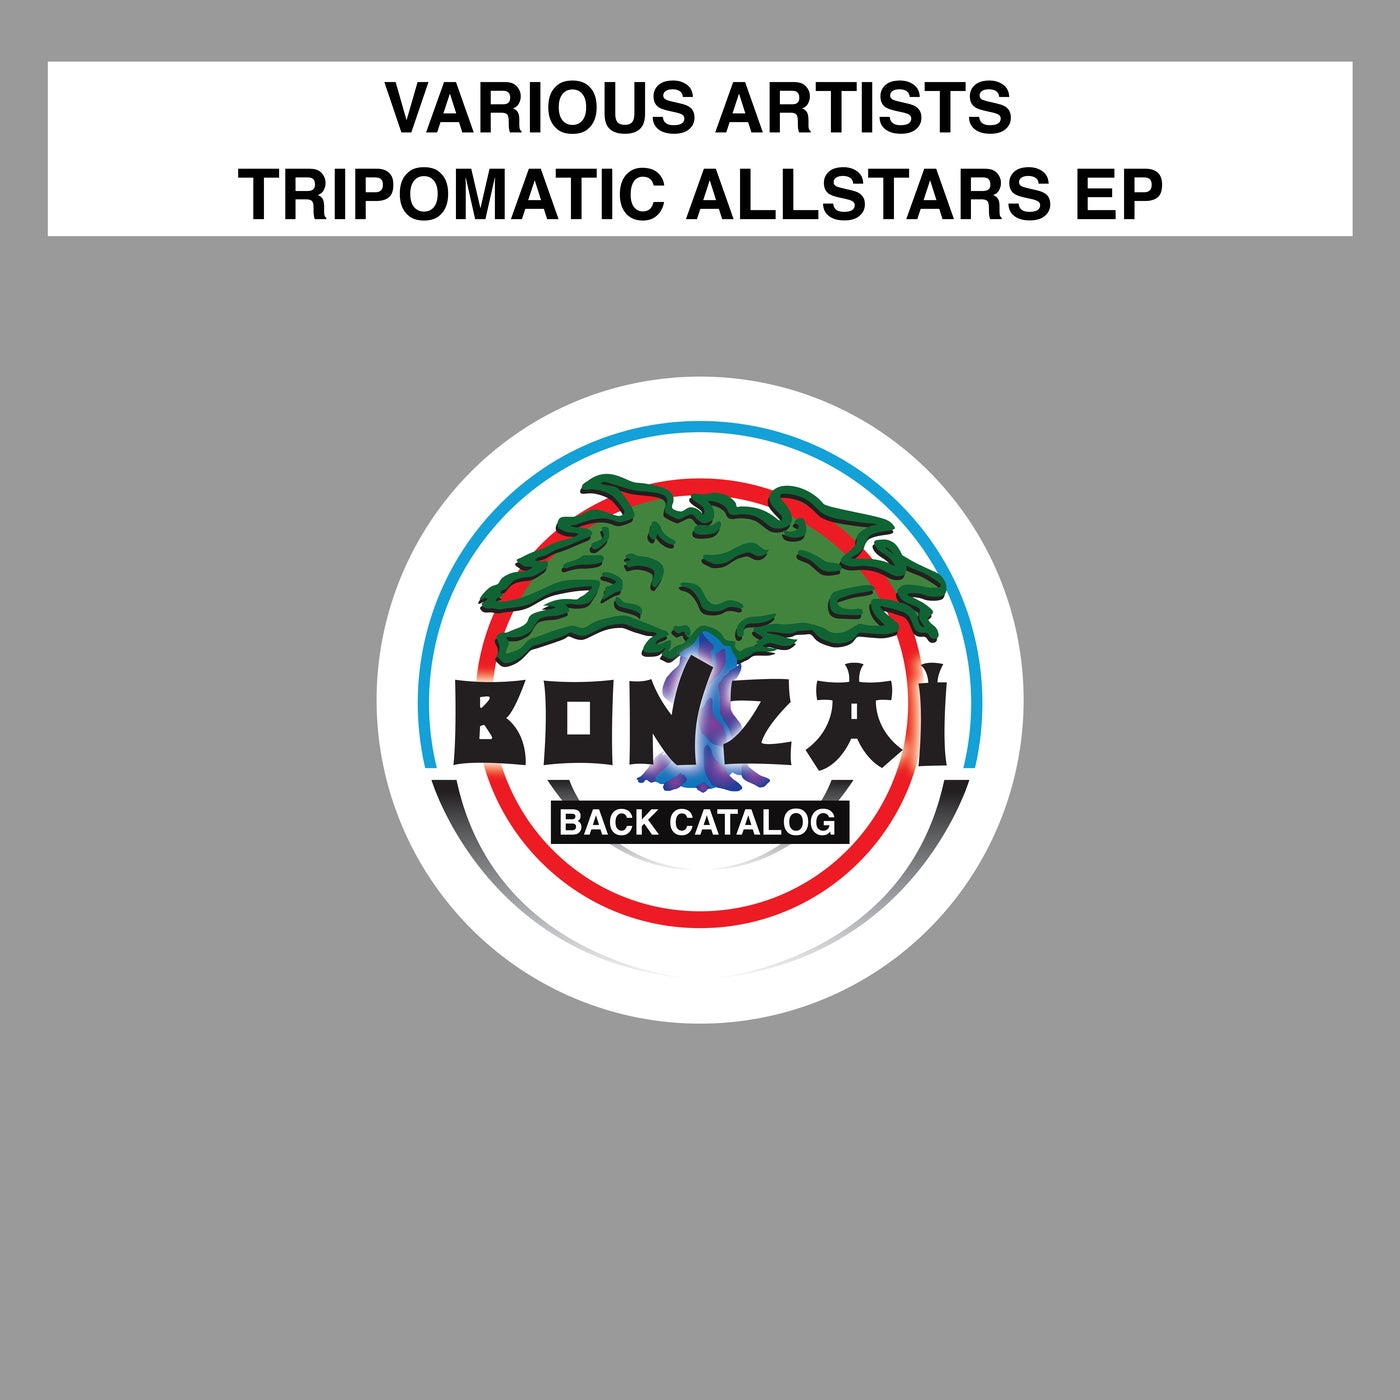 Tripomatic Allstars EP